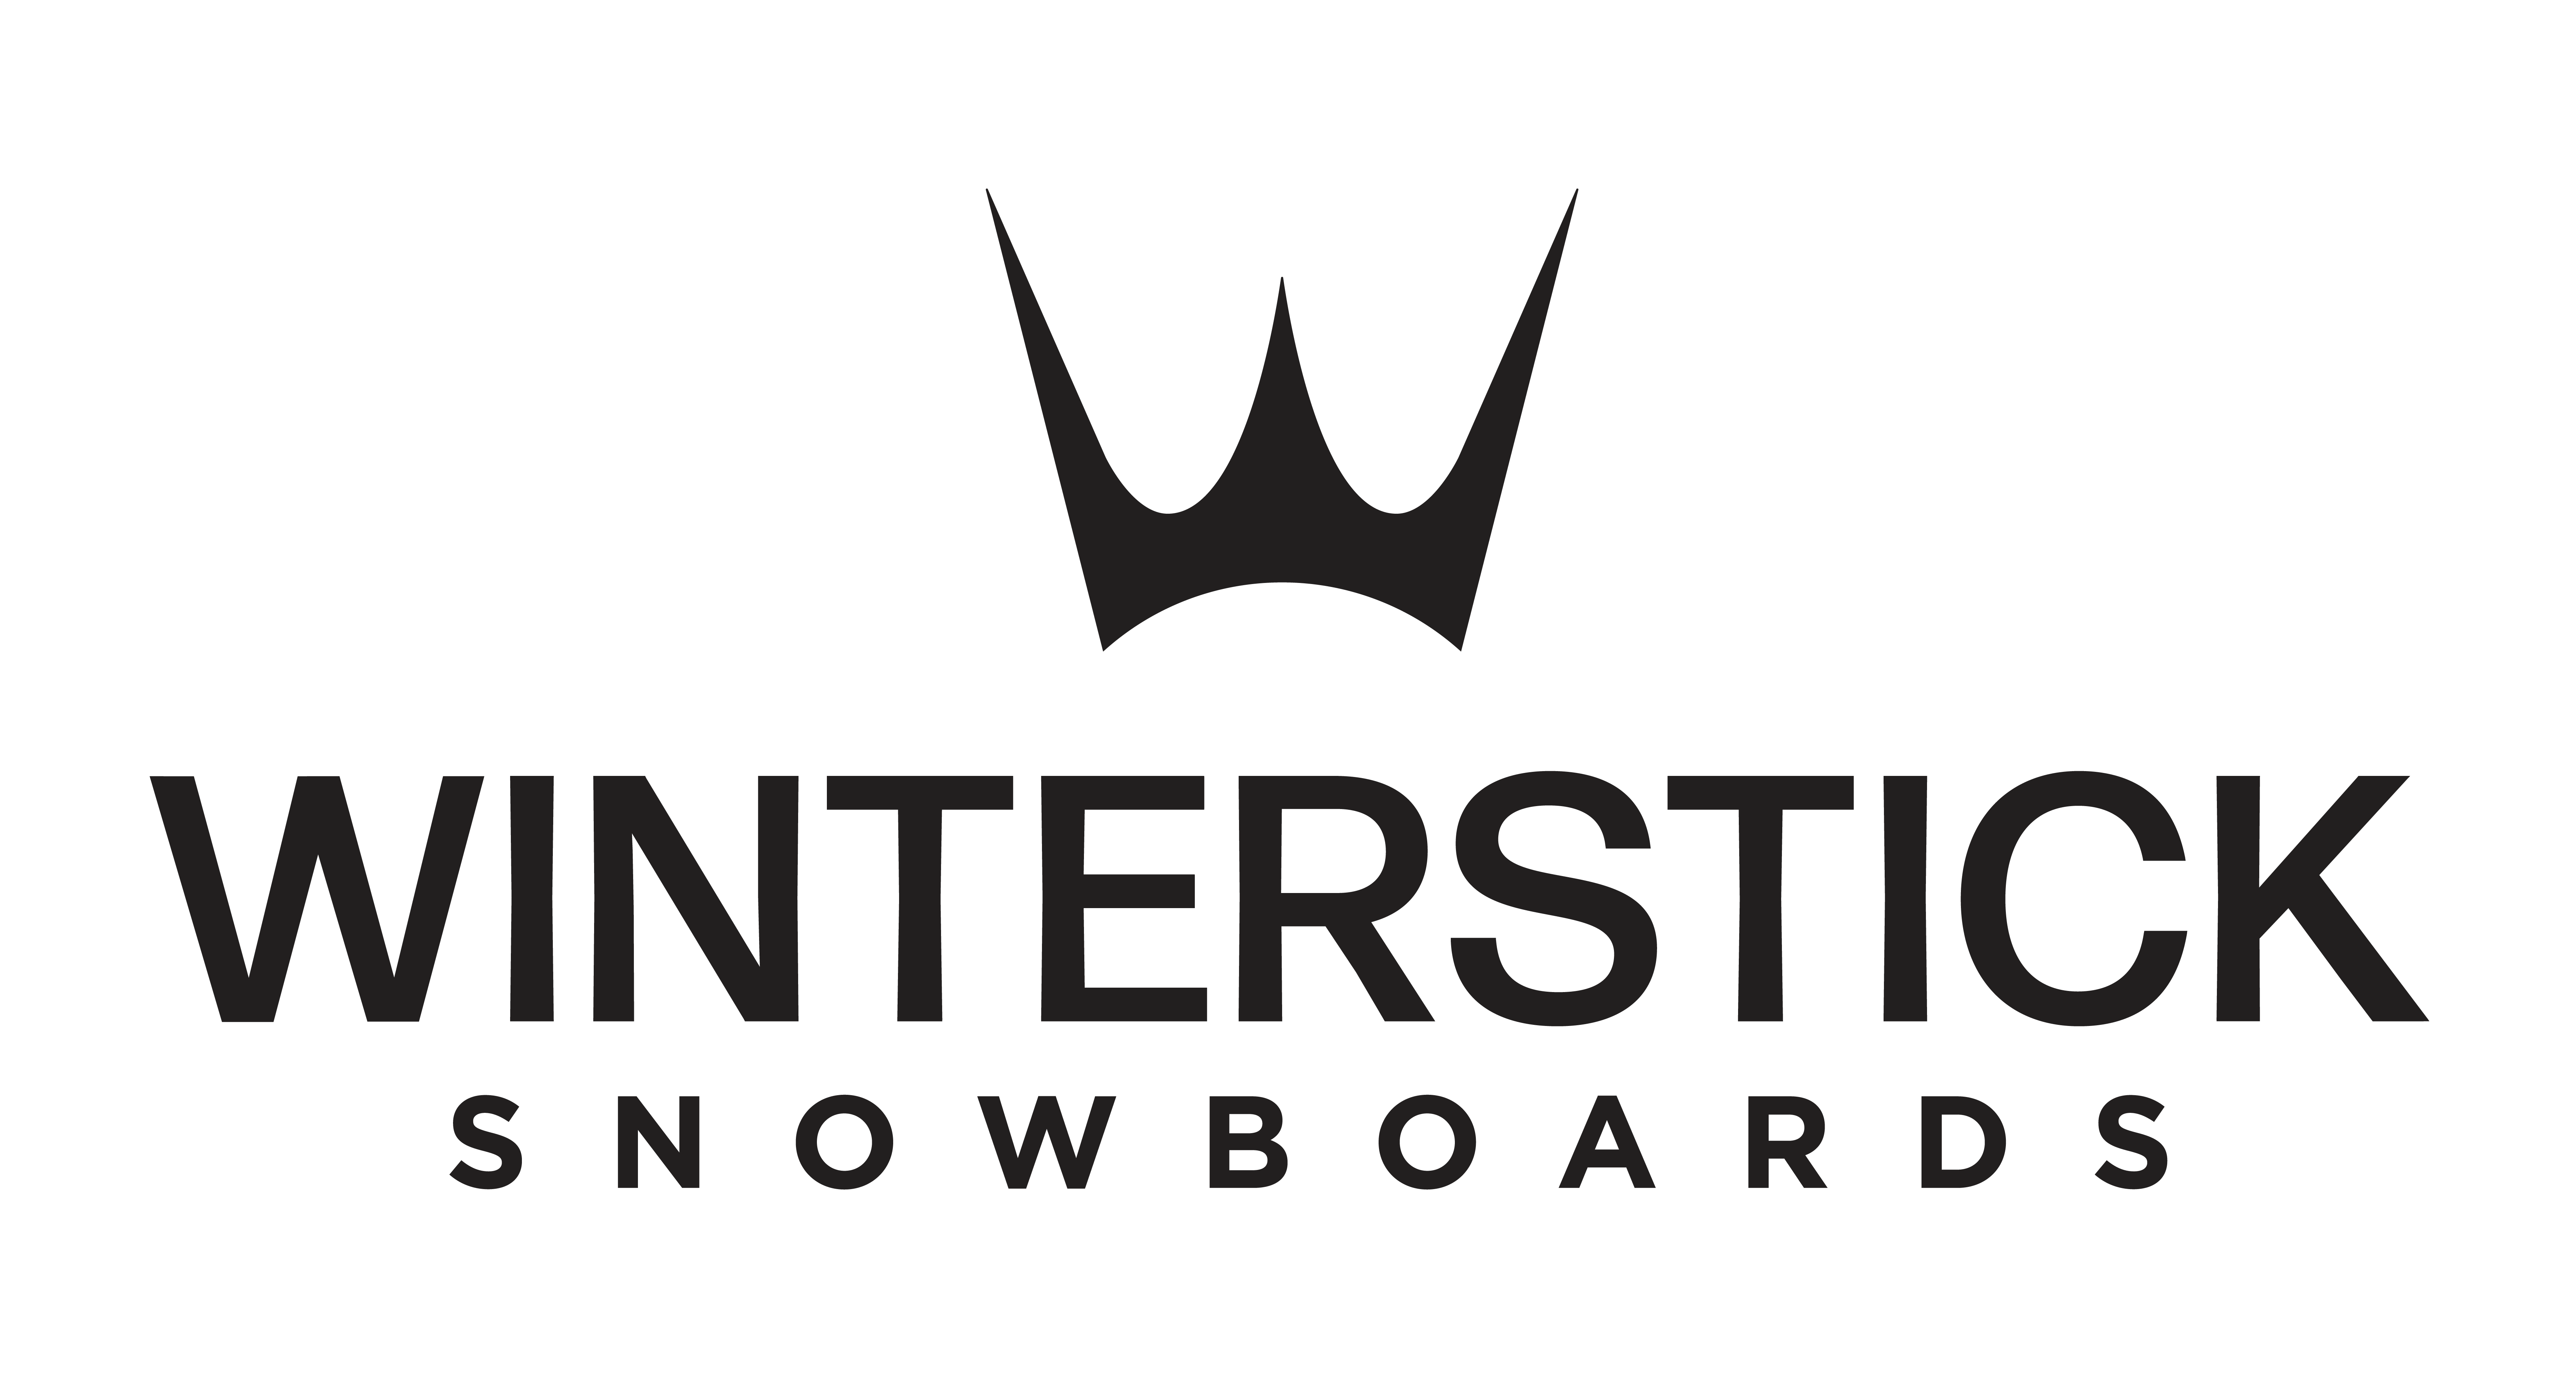 Winterstick Snowboards logo